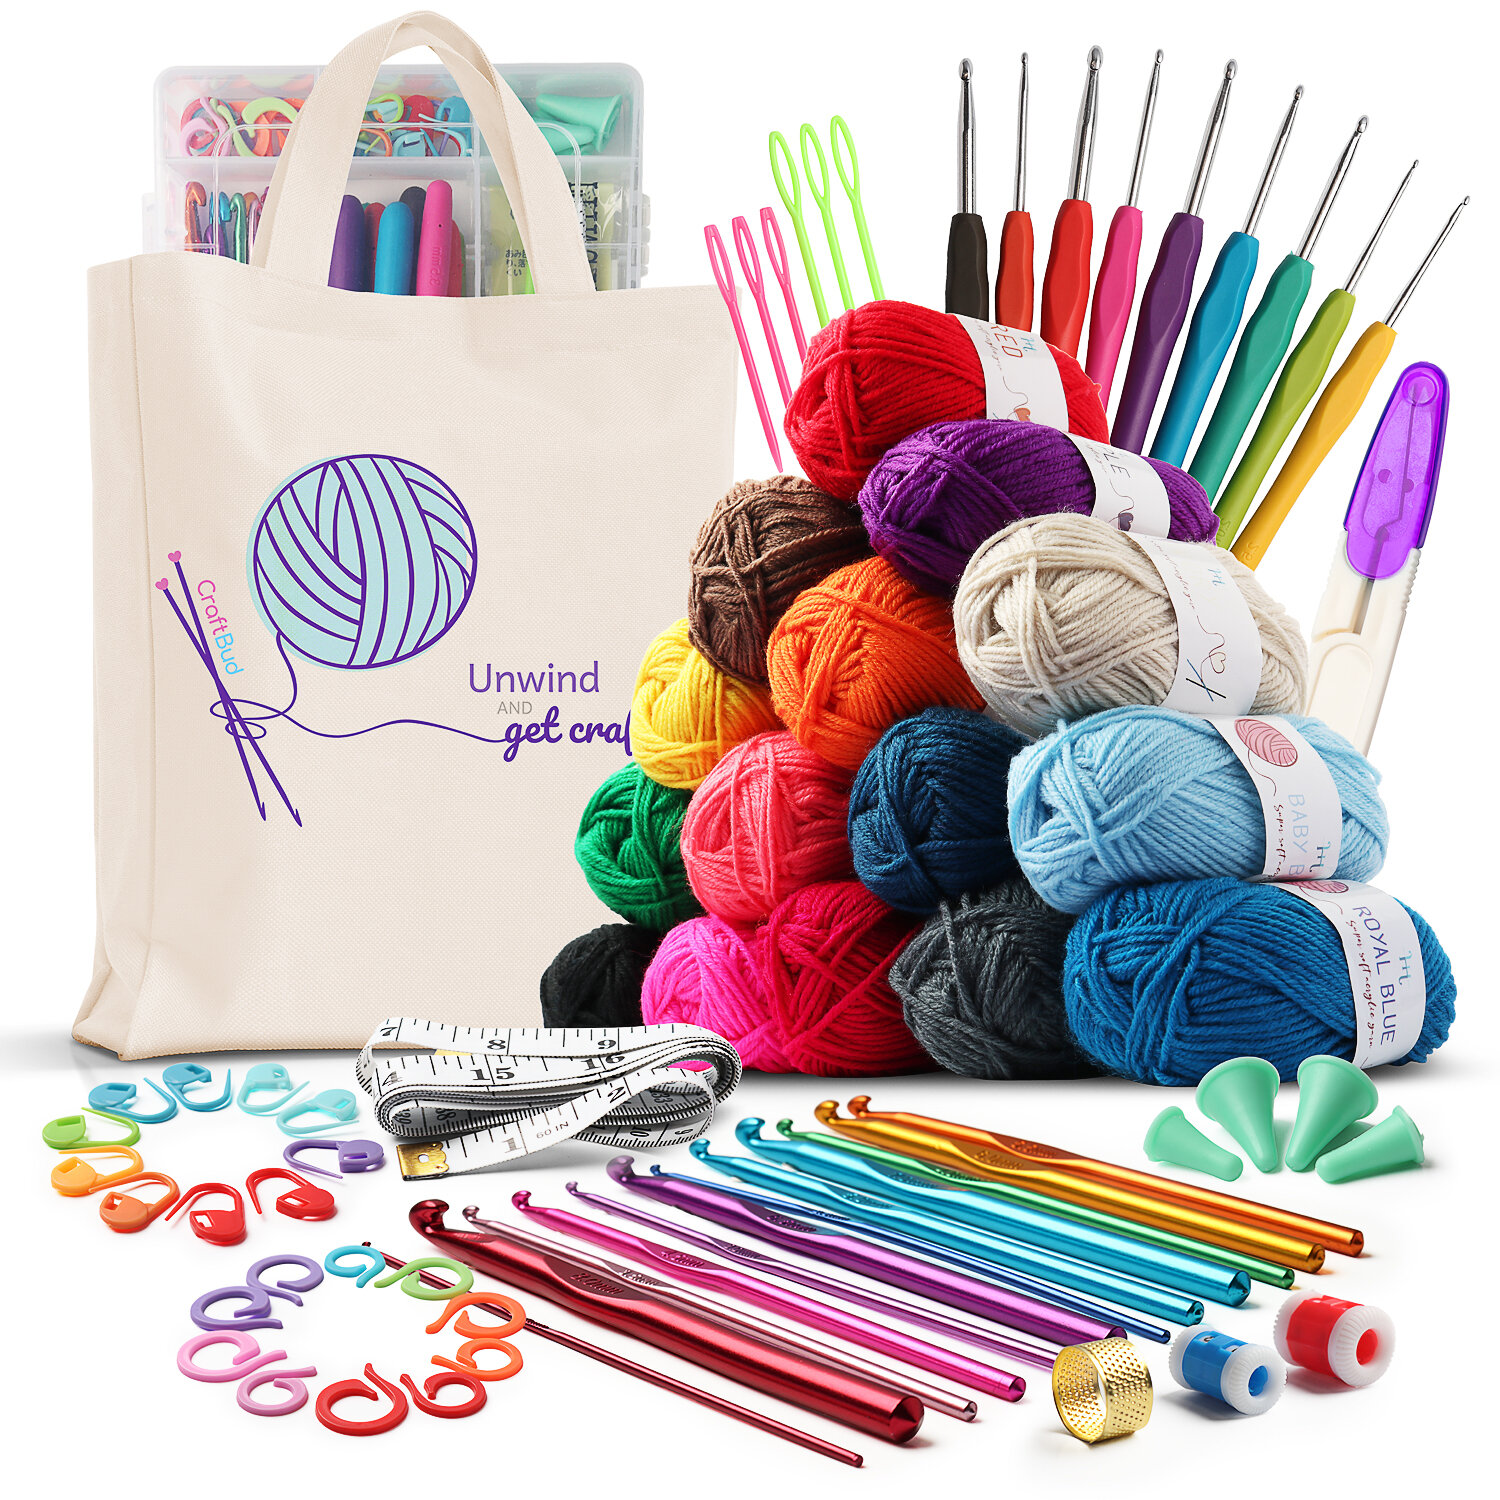 Learn-To-Knit Kit  Knitting kits, Learn to crochet kit, Crochet kit